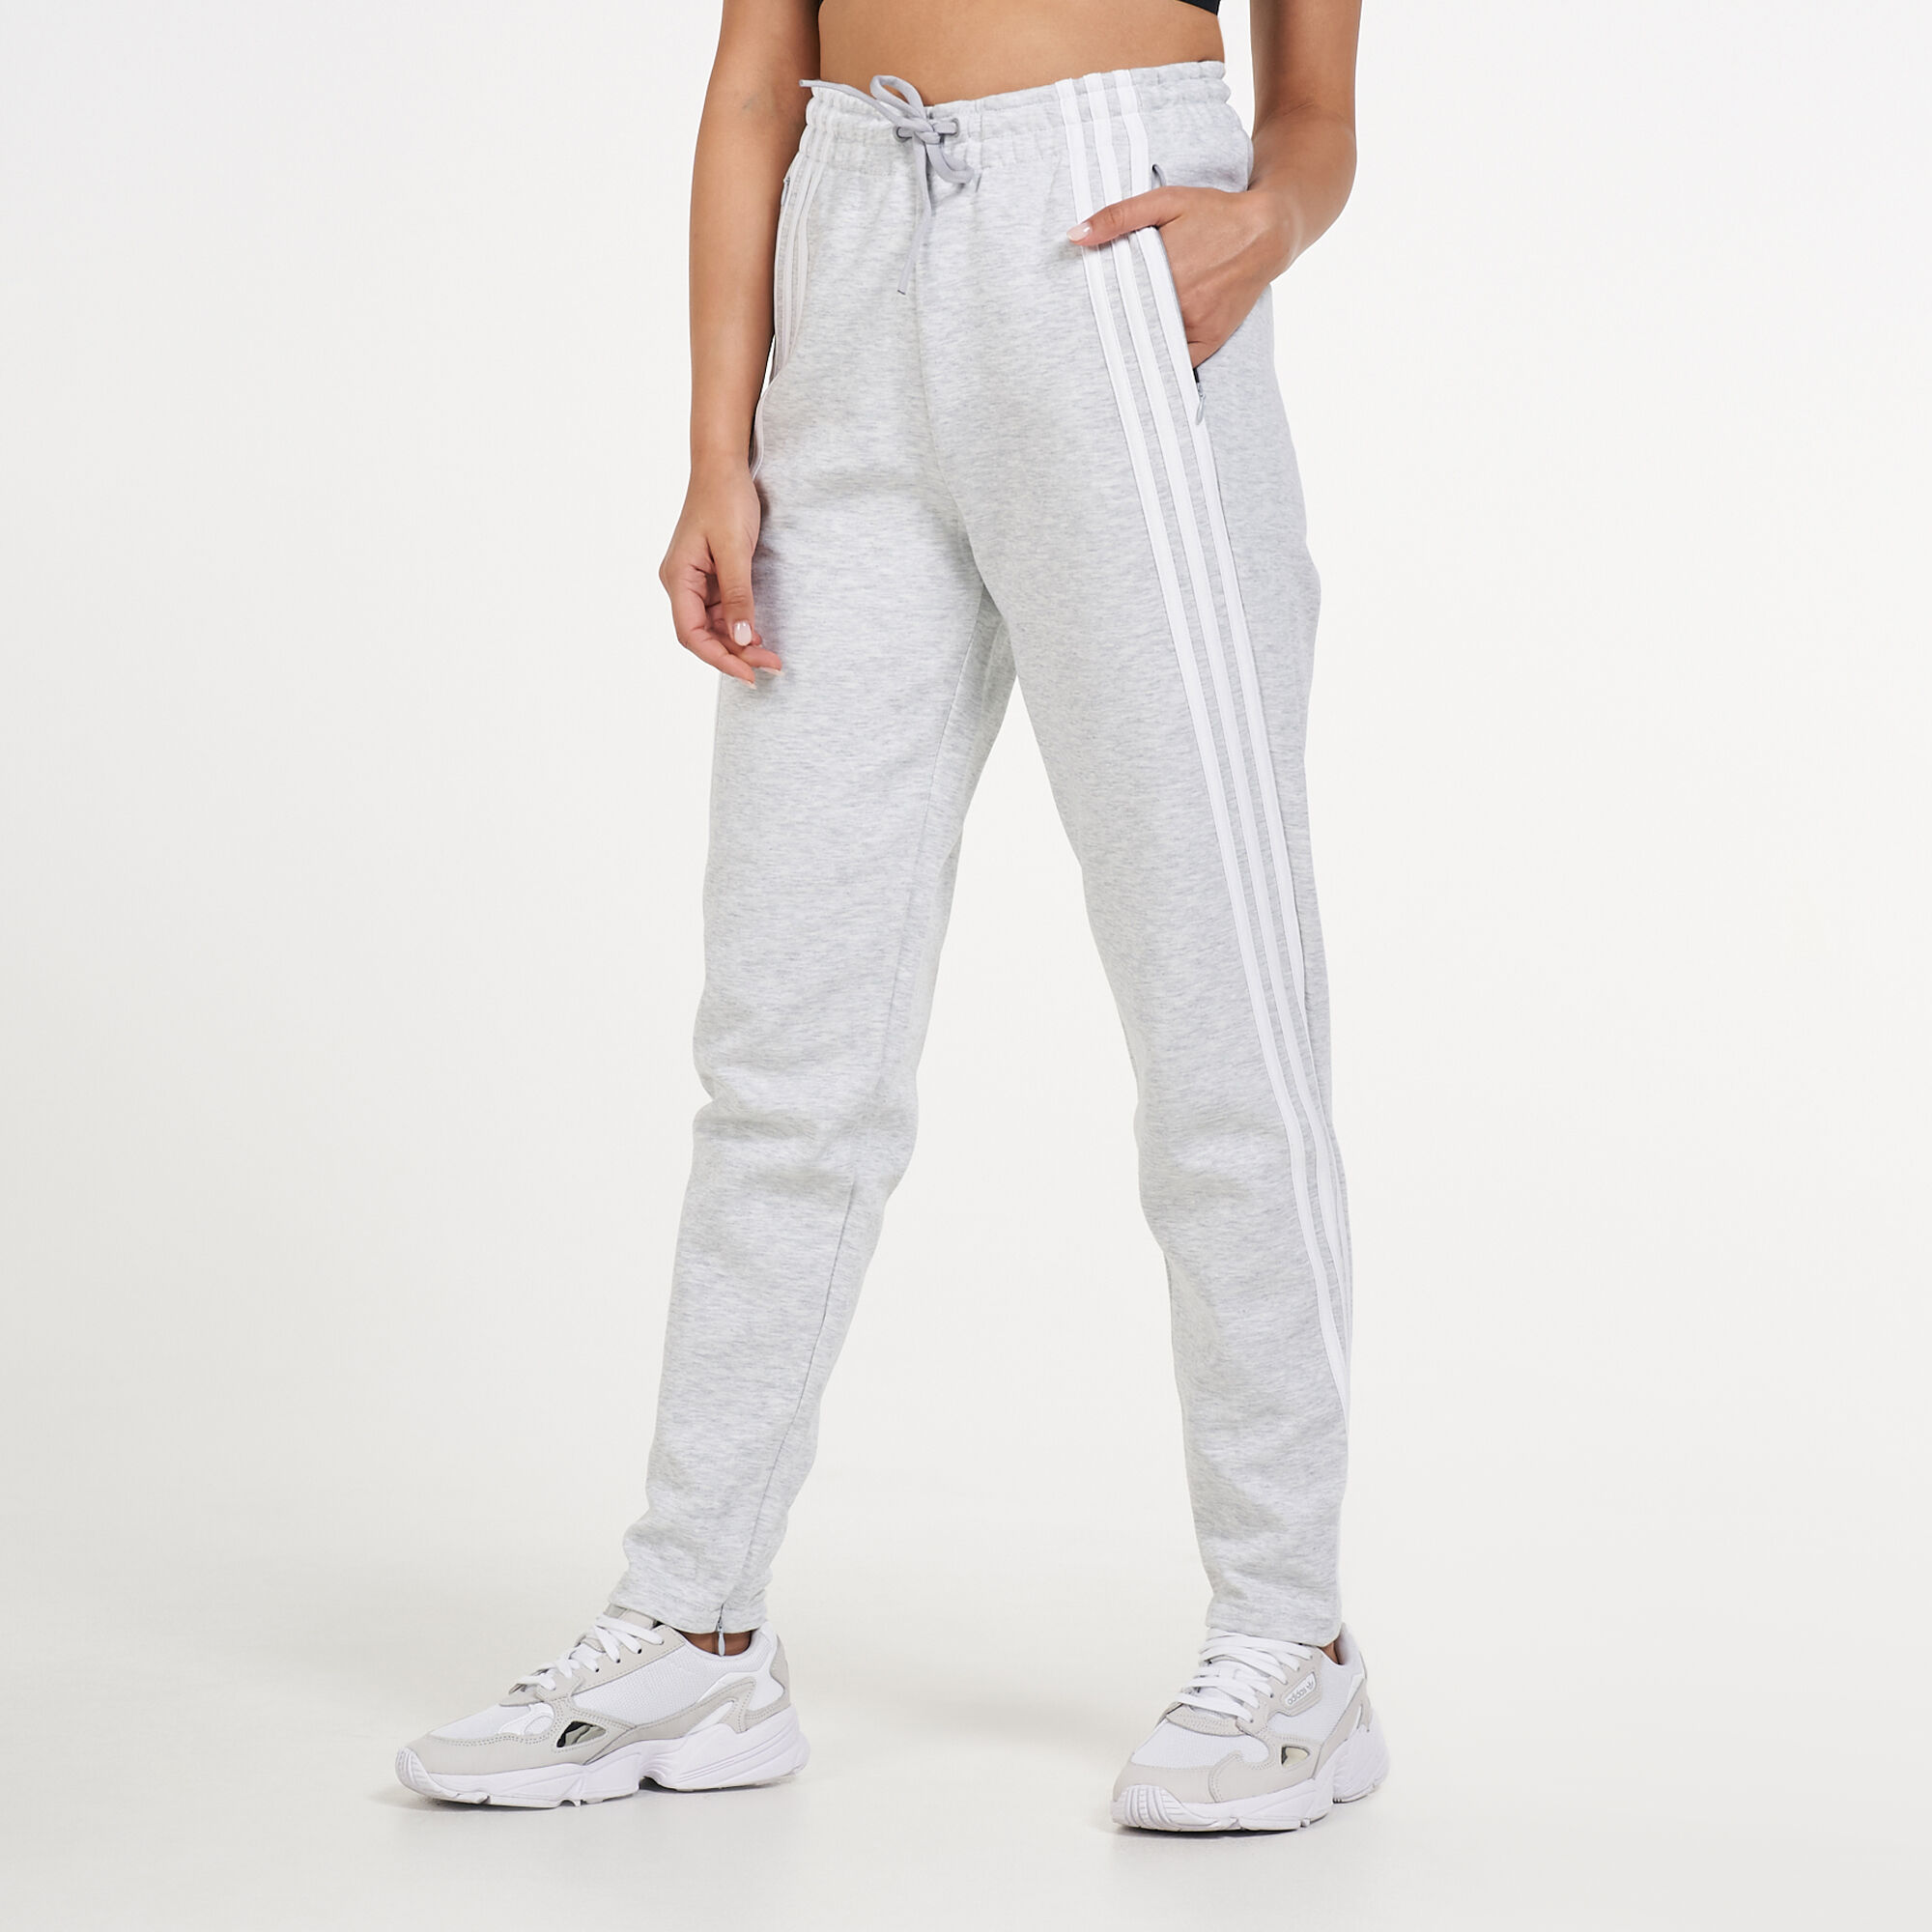 Amazoncom Adidas Zipper Pants